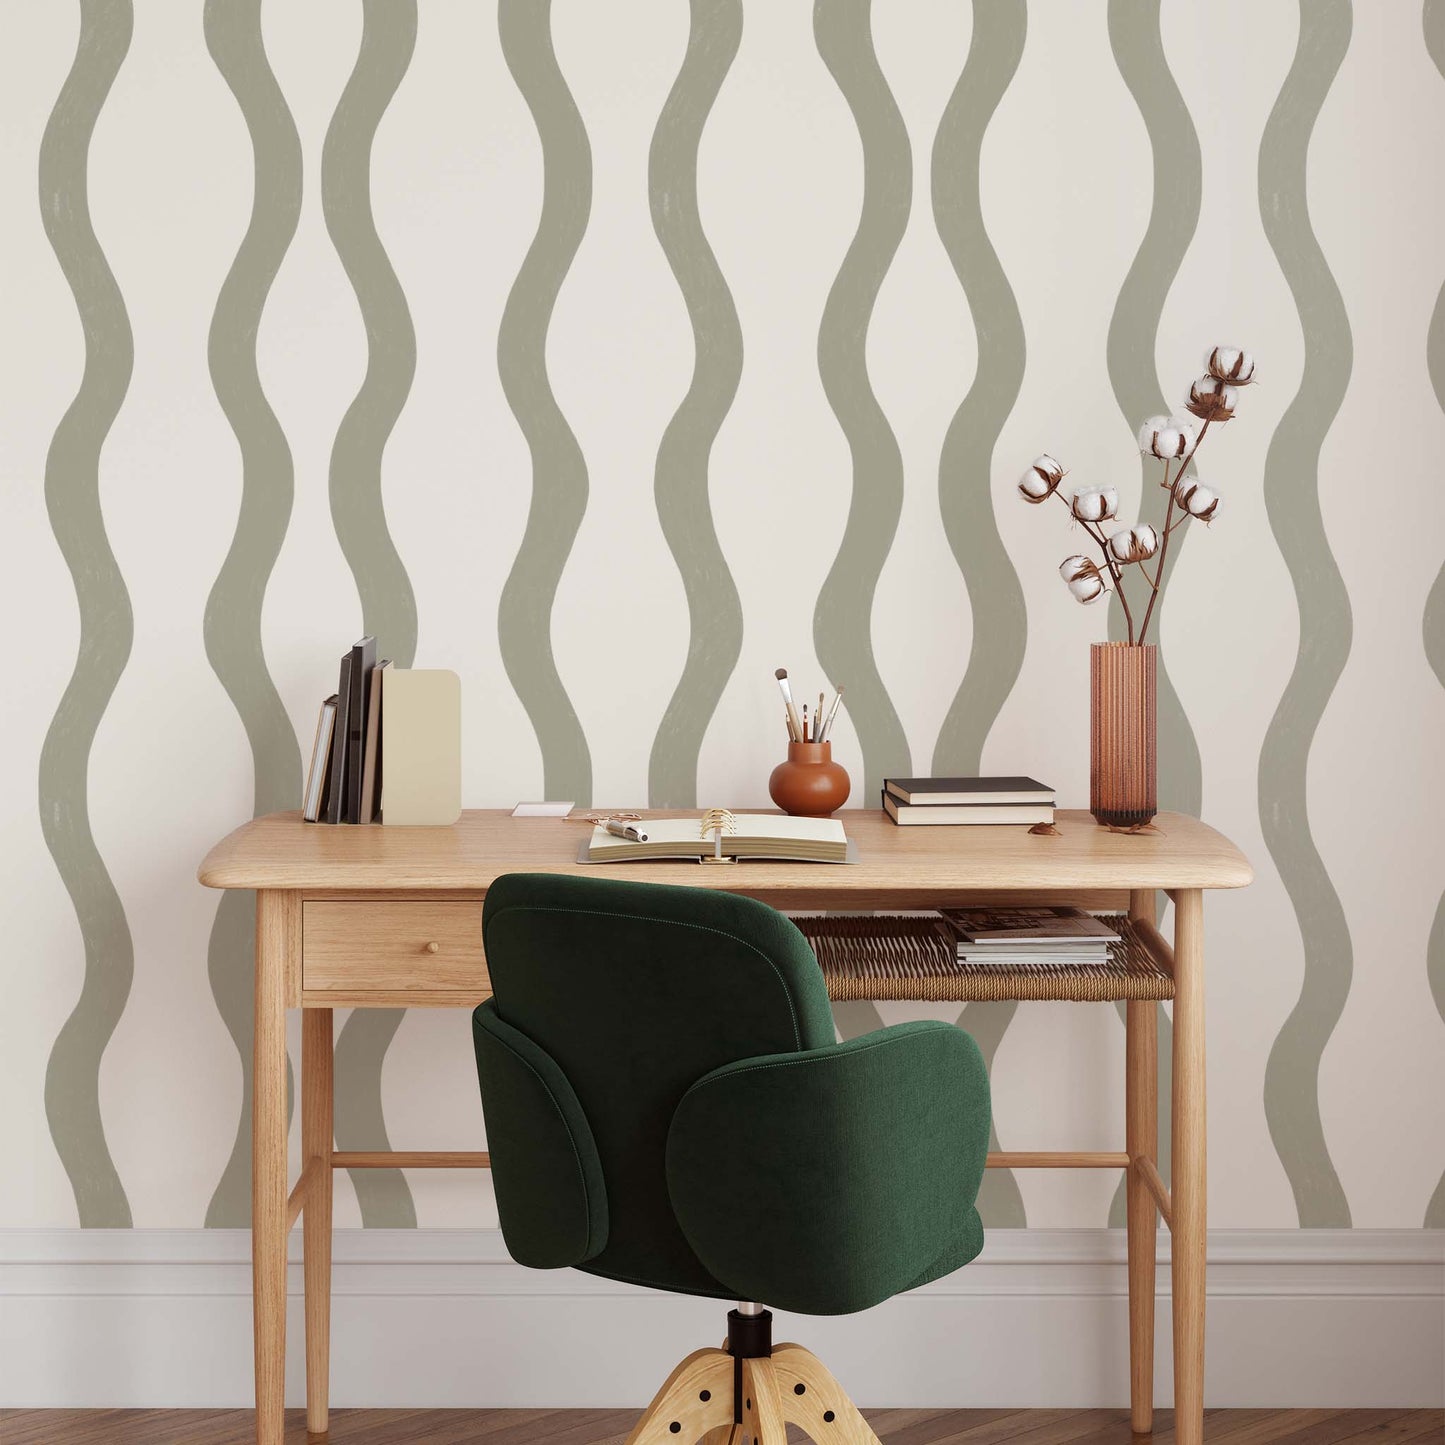 Office featuring Modern Wavy Lines Wallpaper in Sage Green by artist Brenda Bird for Ayara